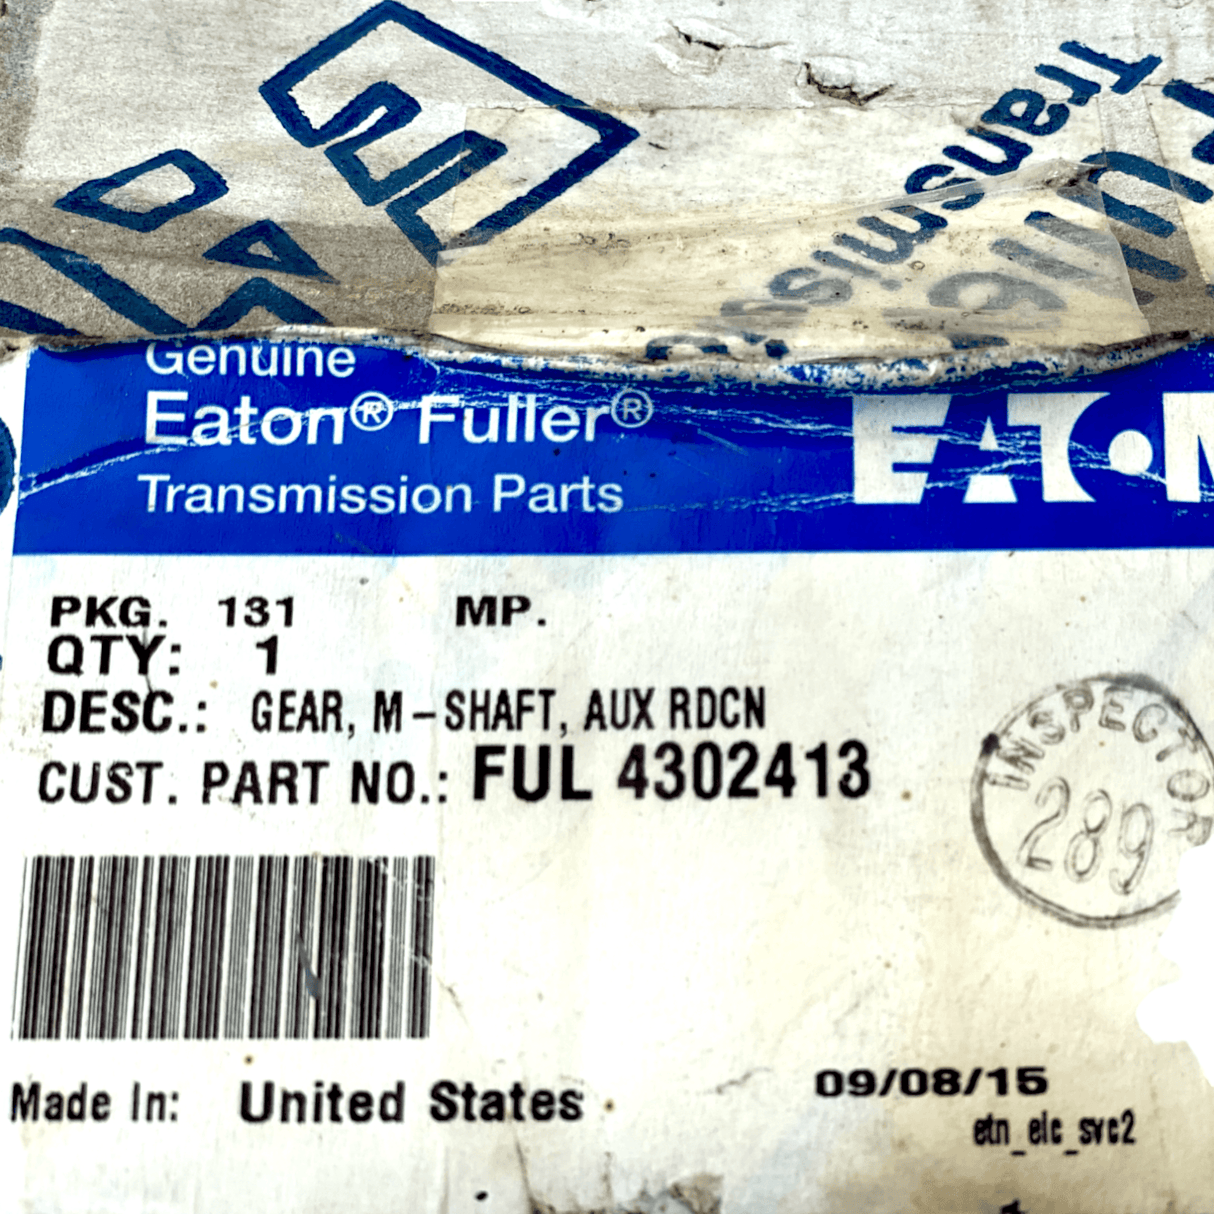 4302413 Ful4302413 Ful 4302413 Oem Eaton Fuller Mainshaft Gear.